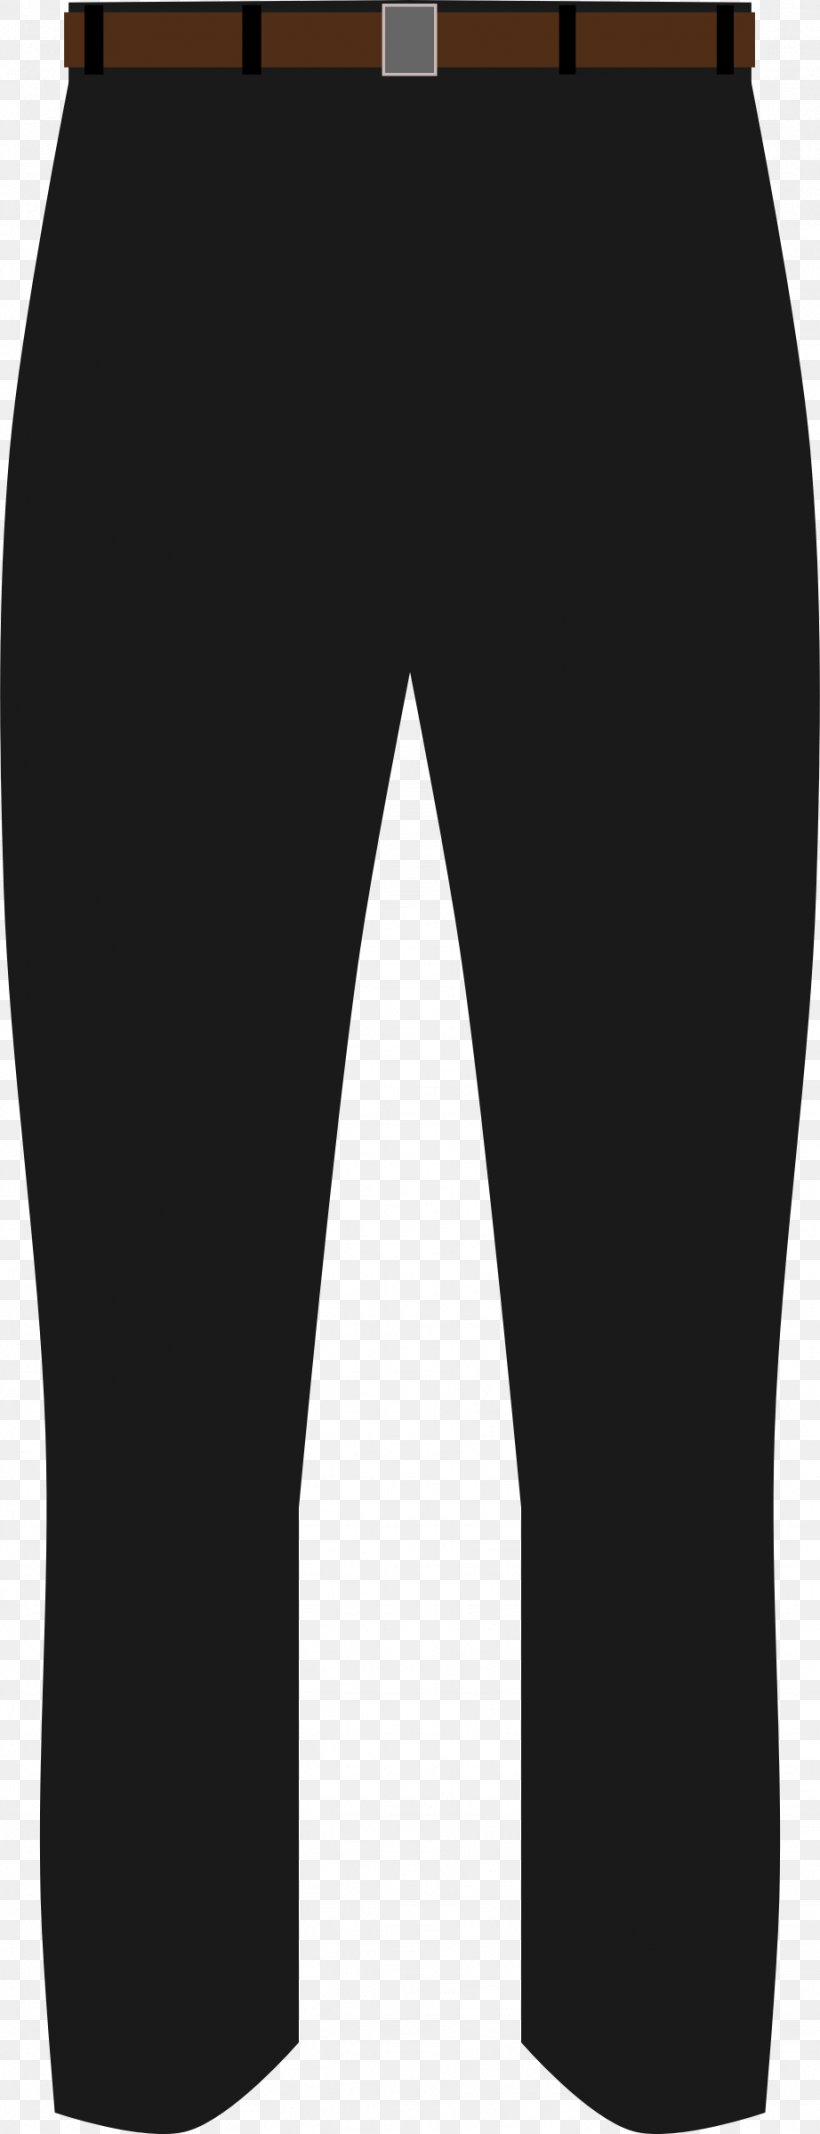 Pants Jeans Shorts Clip Art, PNG, 922x2400px, Pants, Clothing, Jeans, Leggings, Royaltyfree Download Free